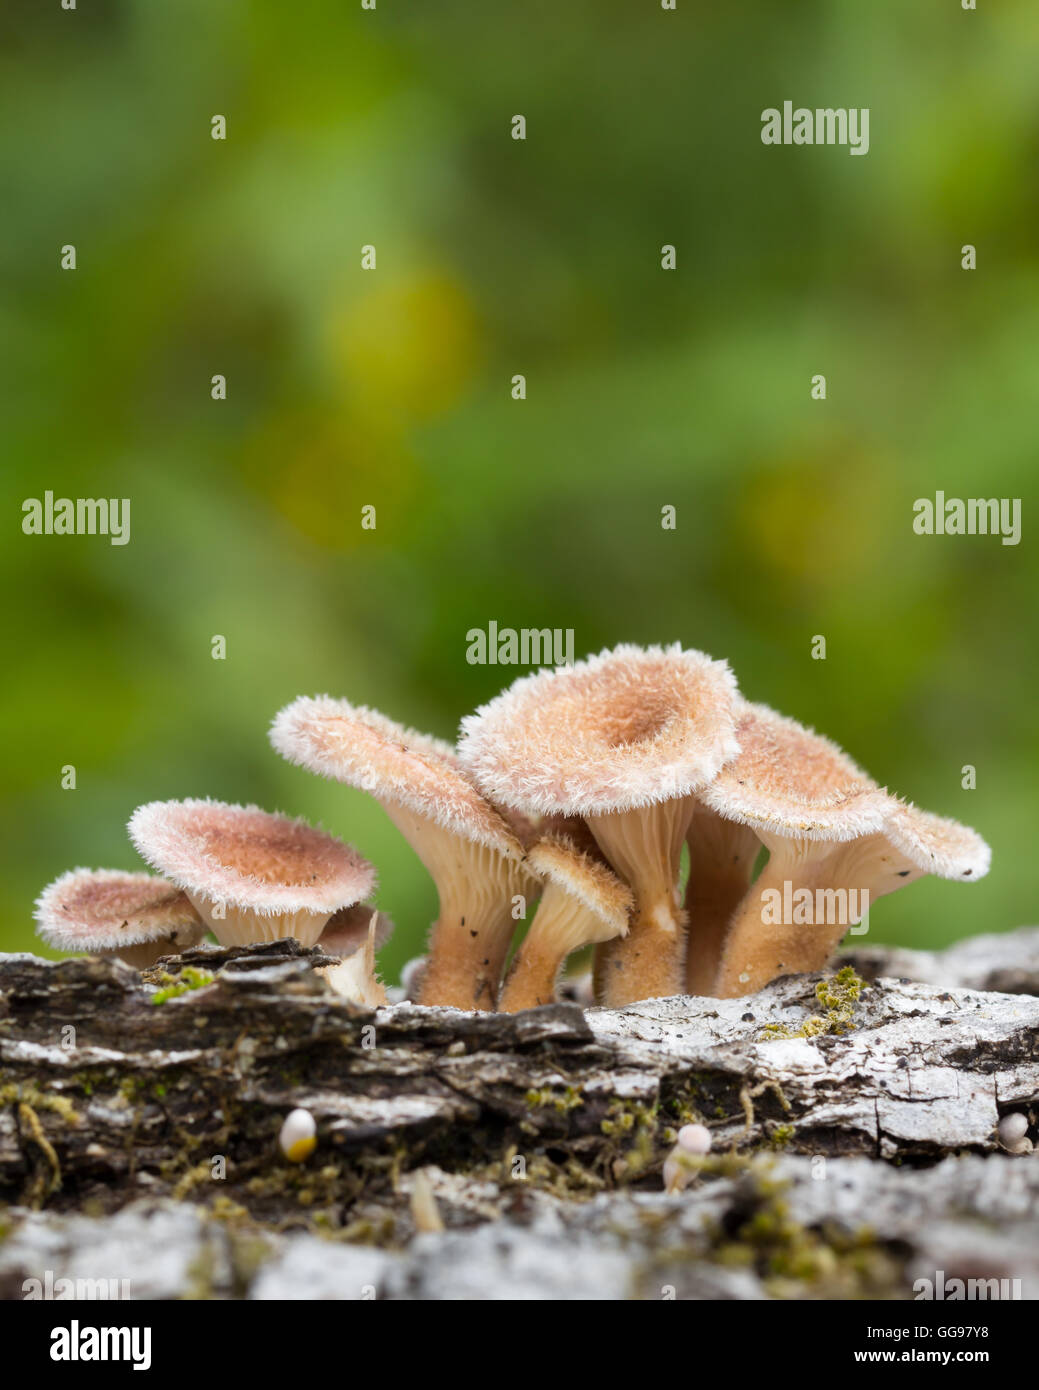 Cluster of young hairy mushroom fungi on fallen hardwood log. Possibly Lentinus crinitus aka fringed Sawgill mushroom. Stock Photo